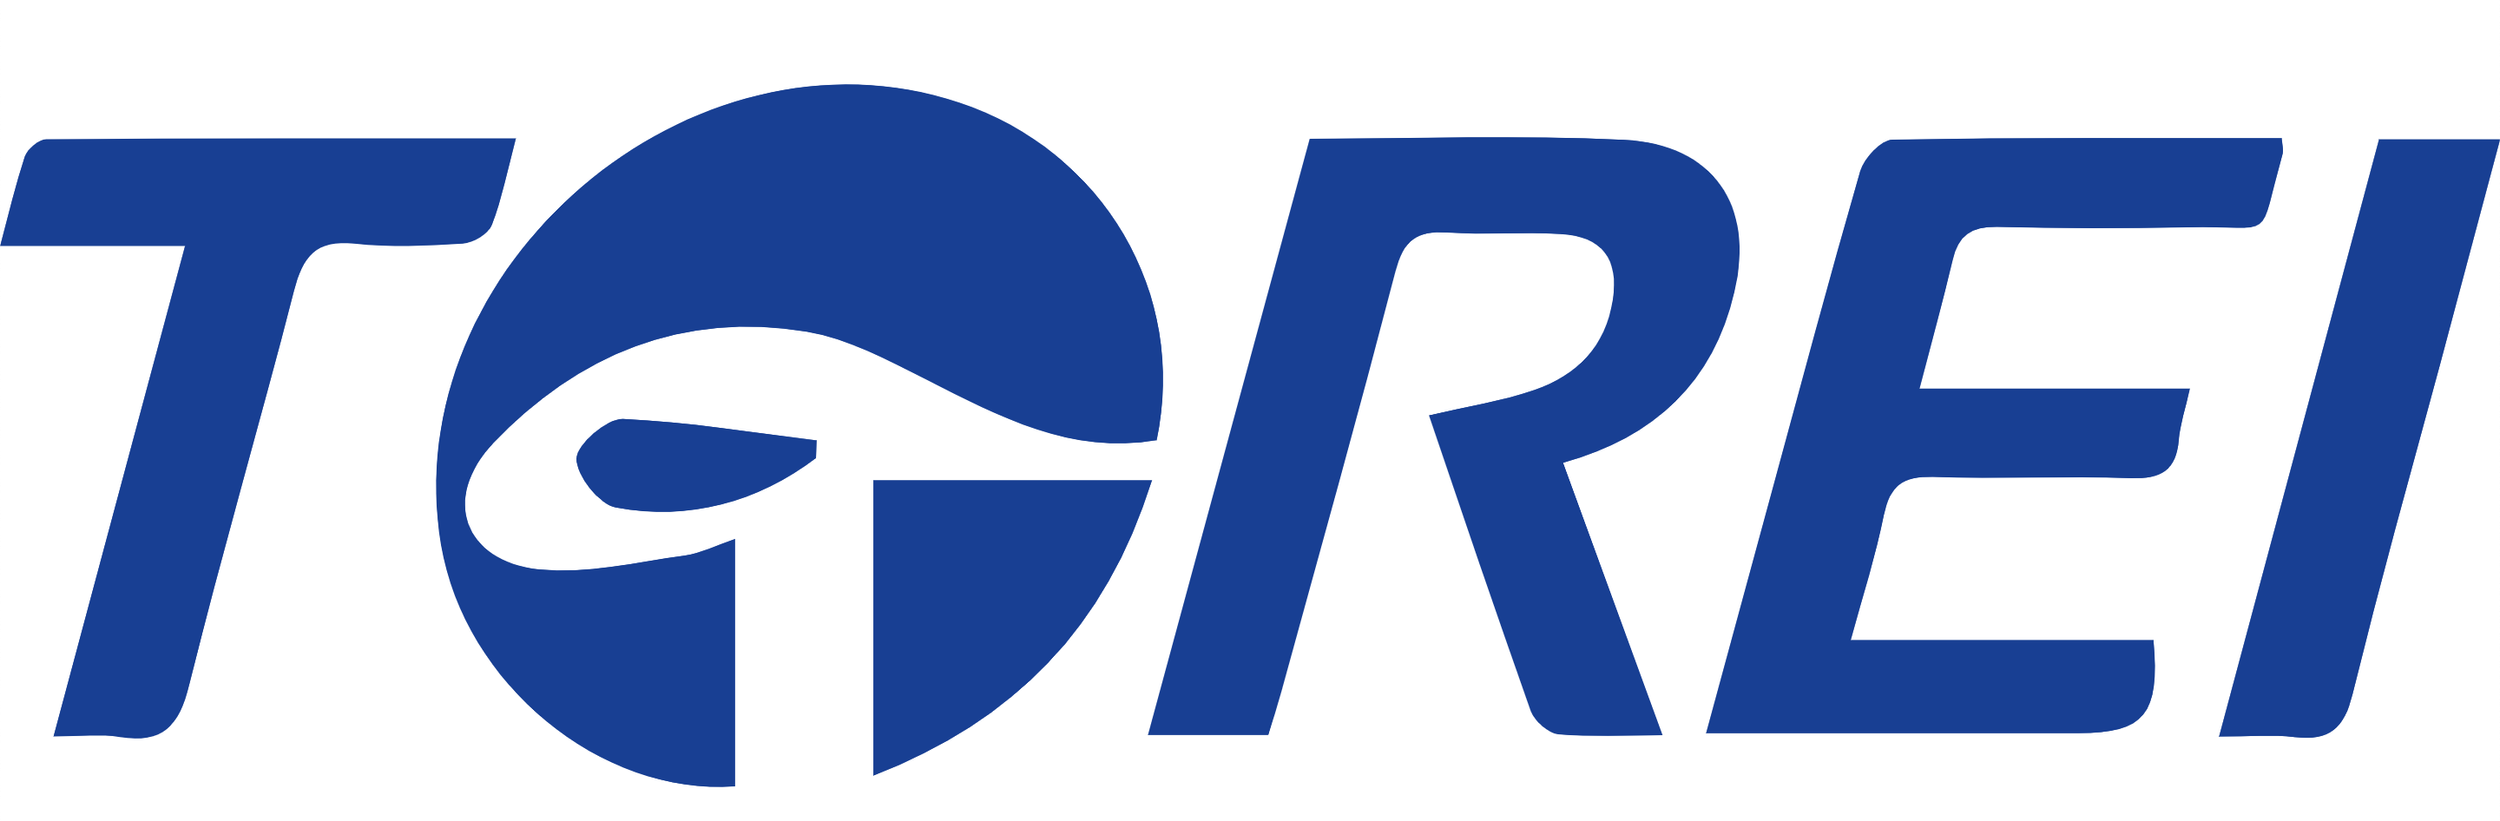 Toyo Reizo Logo.png